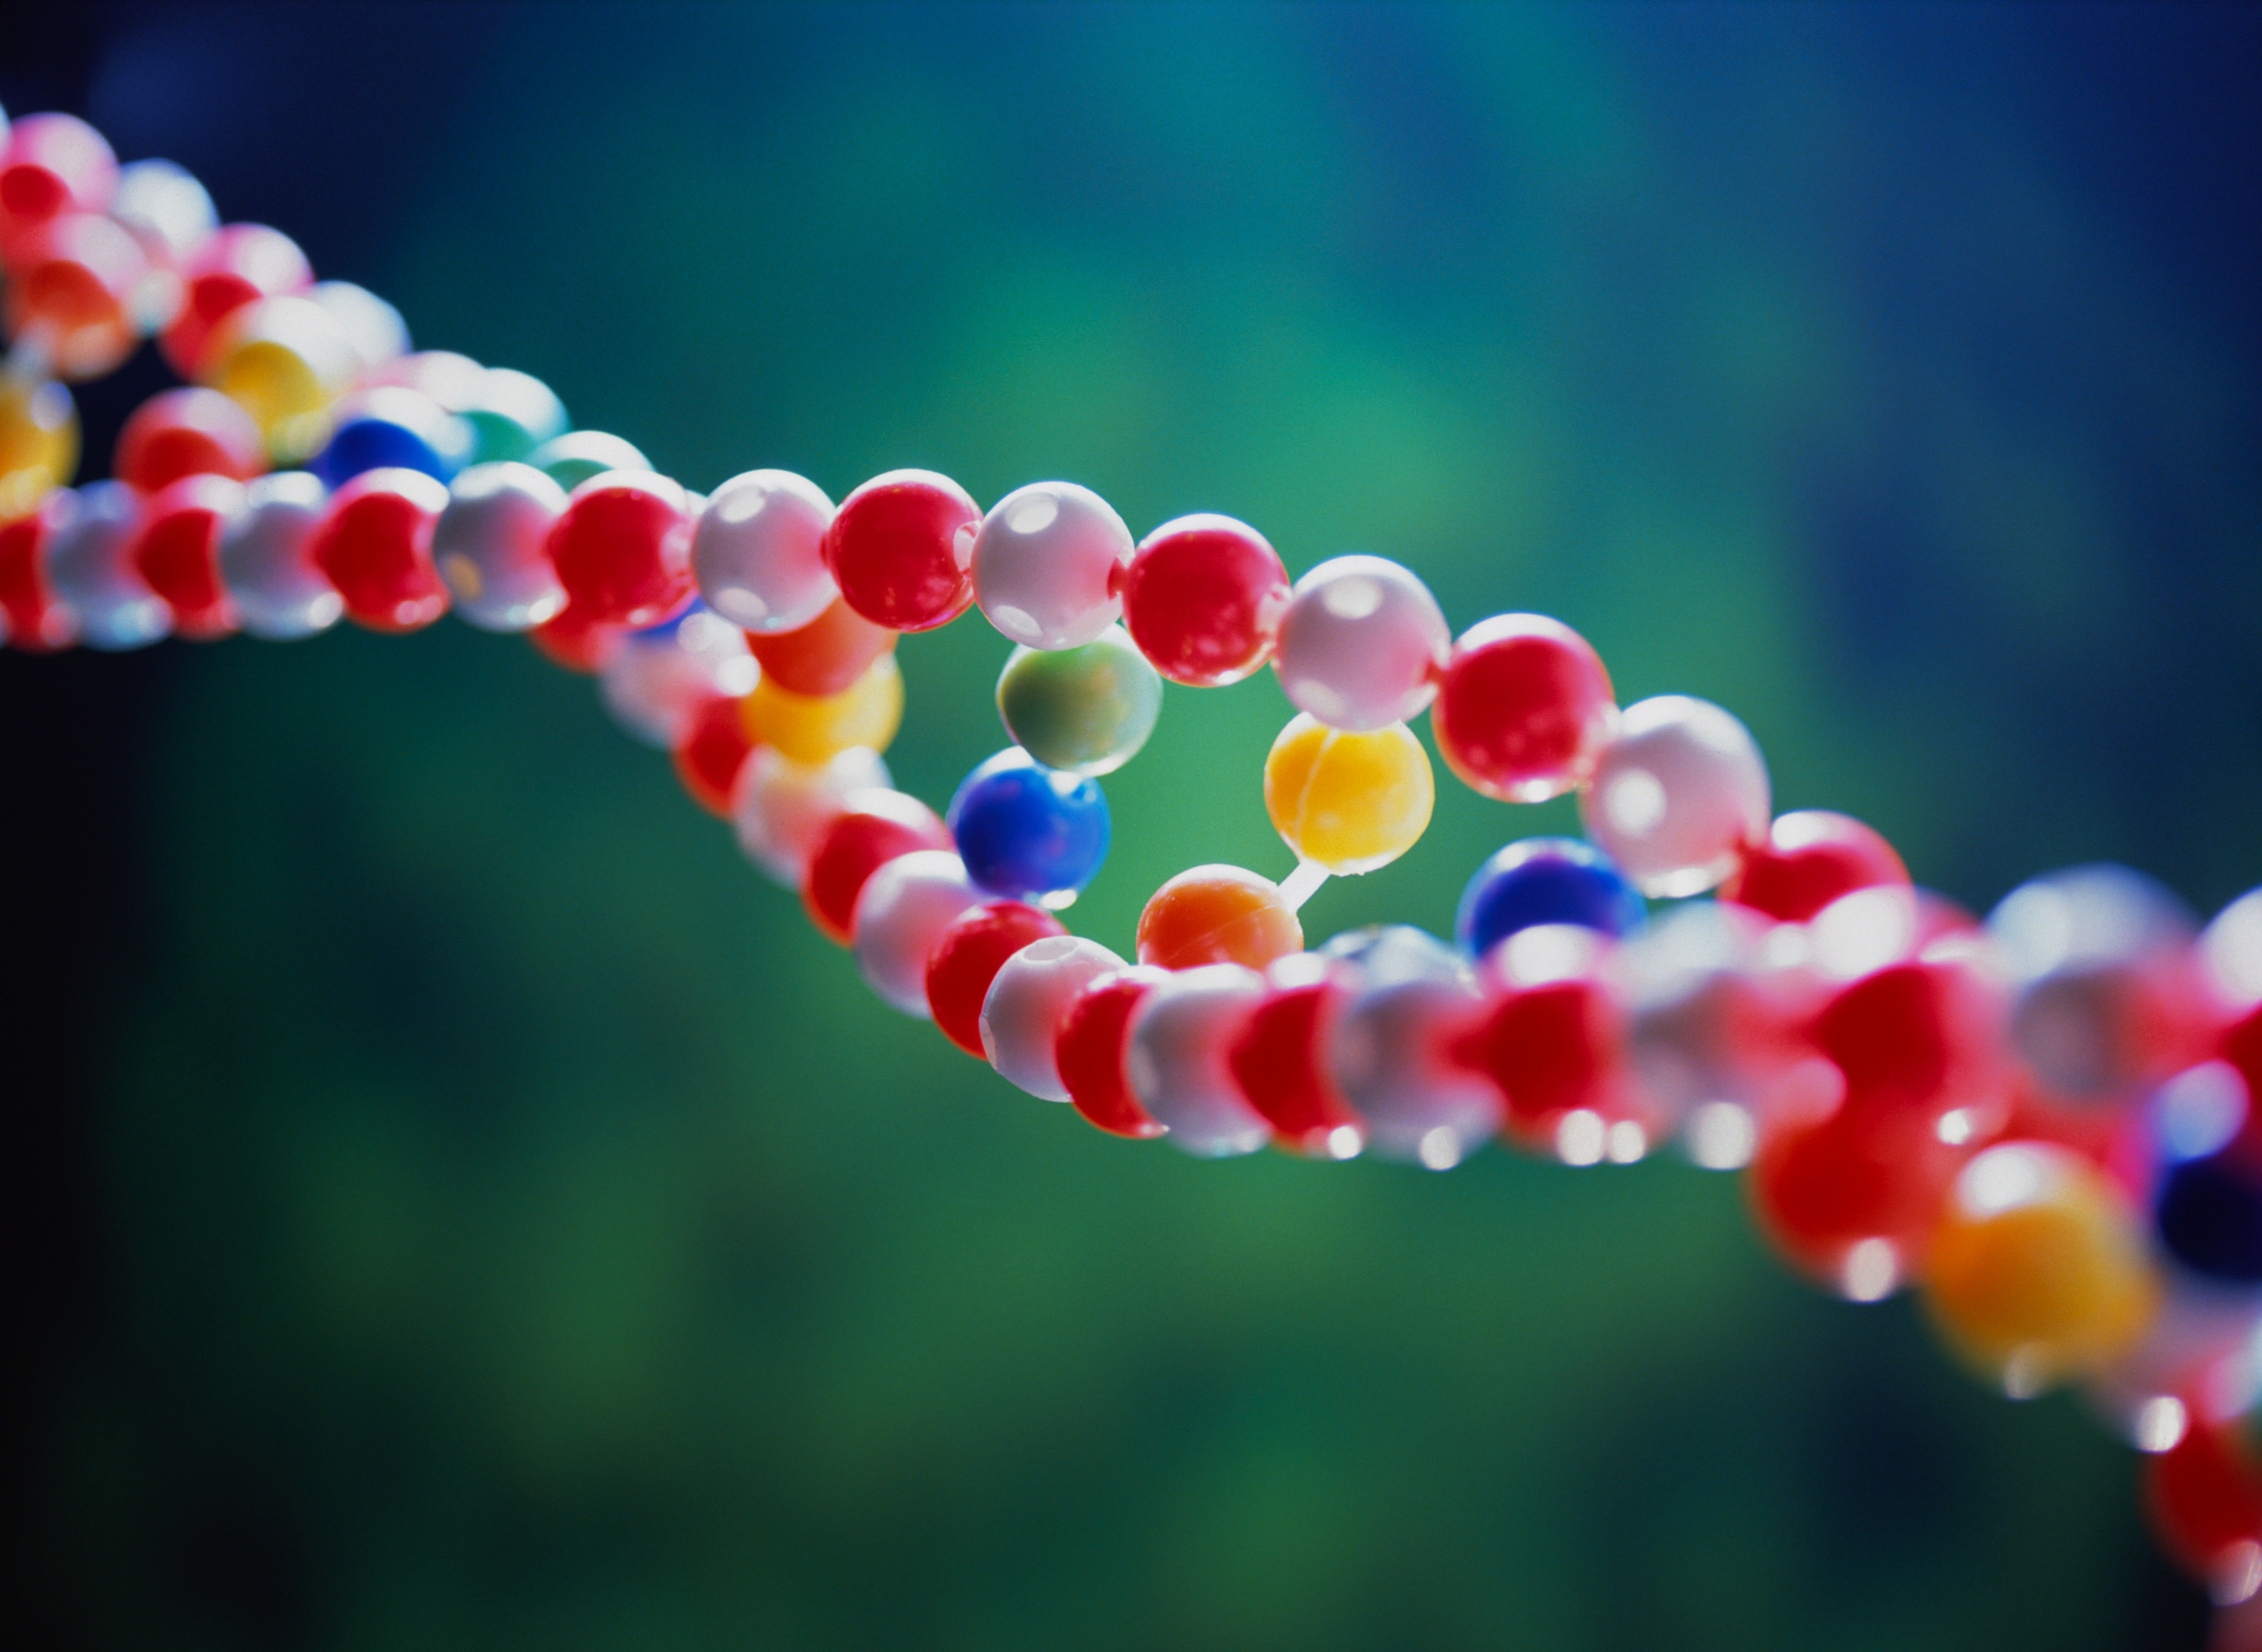 Медитация днк. Молекула ДНК. Молекулы цветные. Красивая молекула ДНК. Разноцветные молекулы.